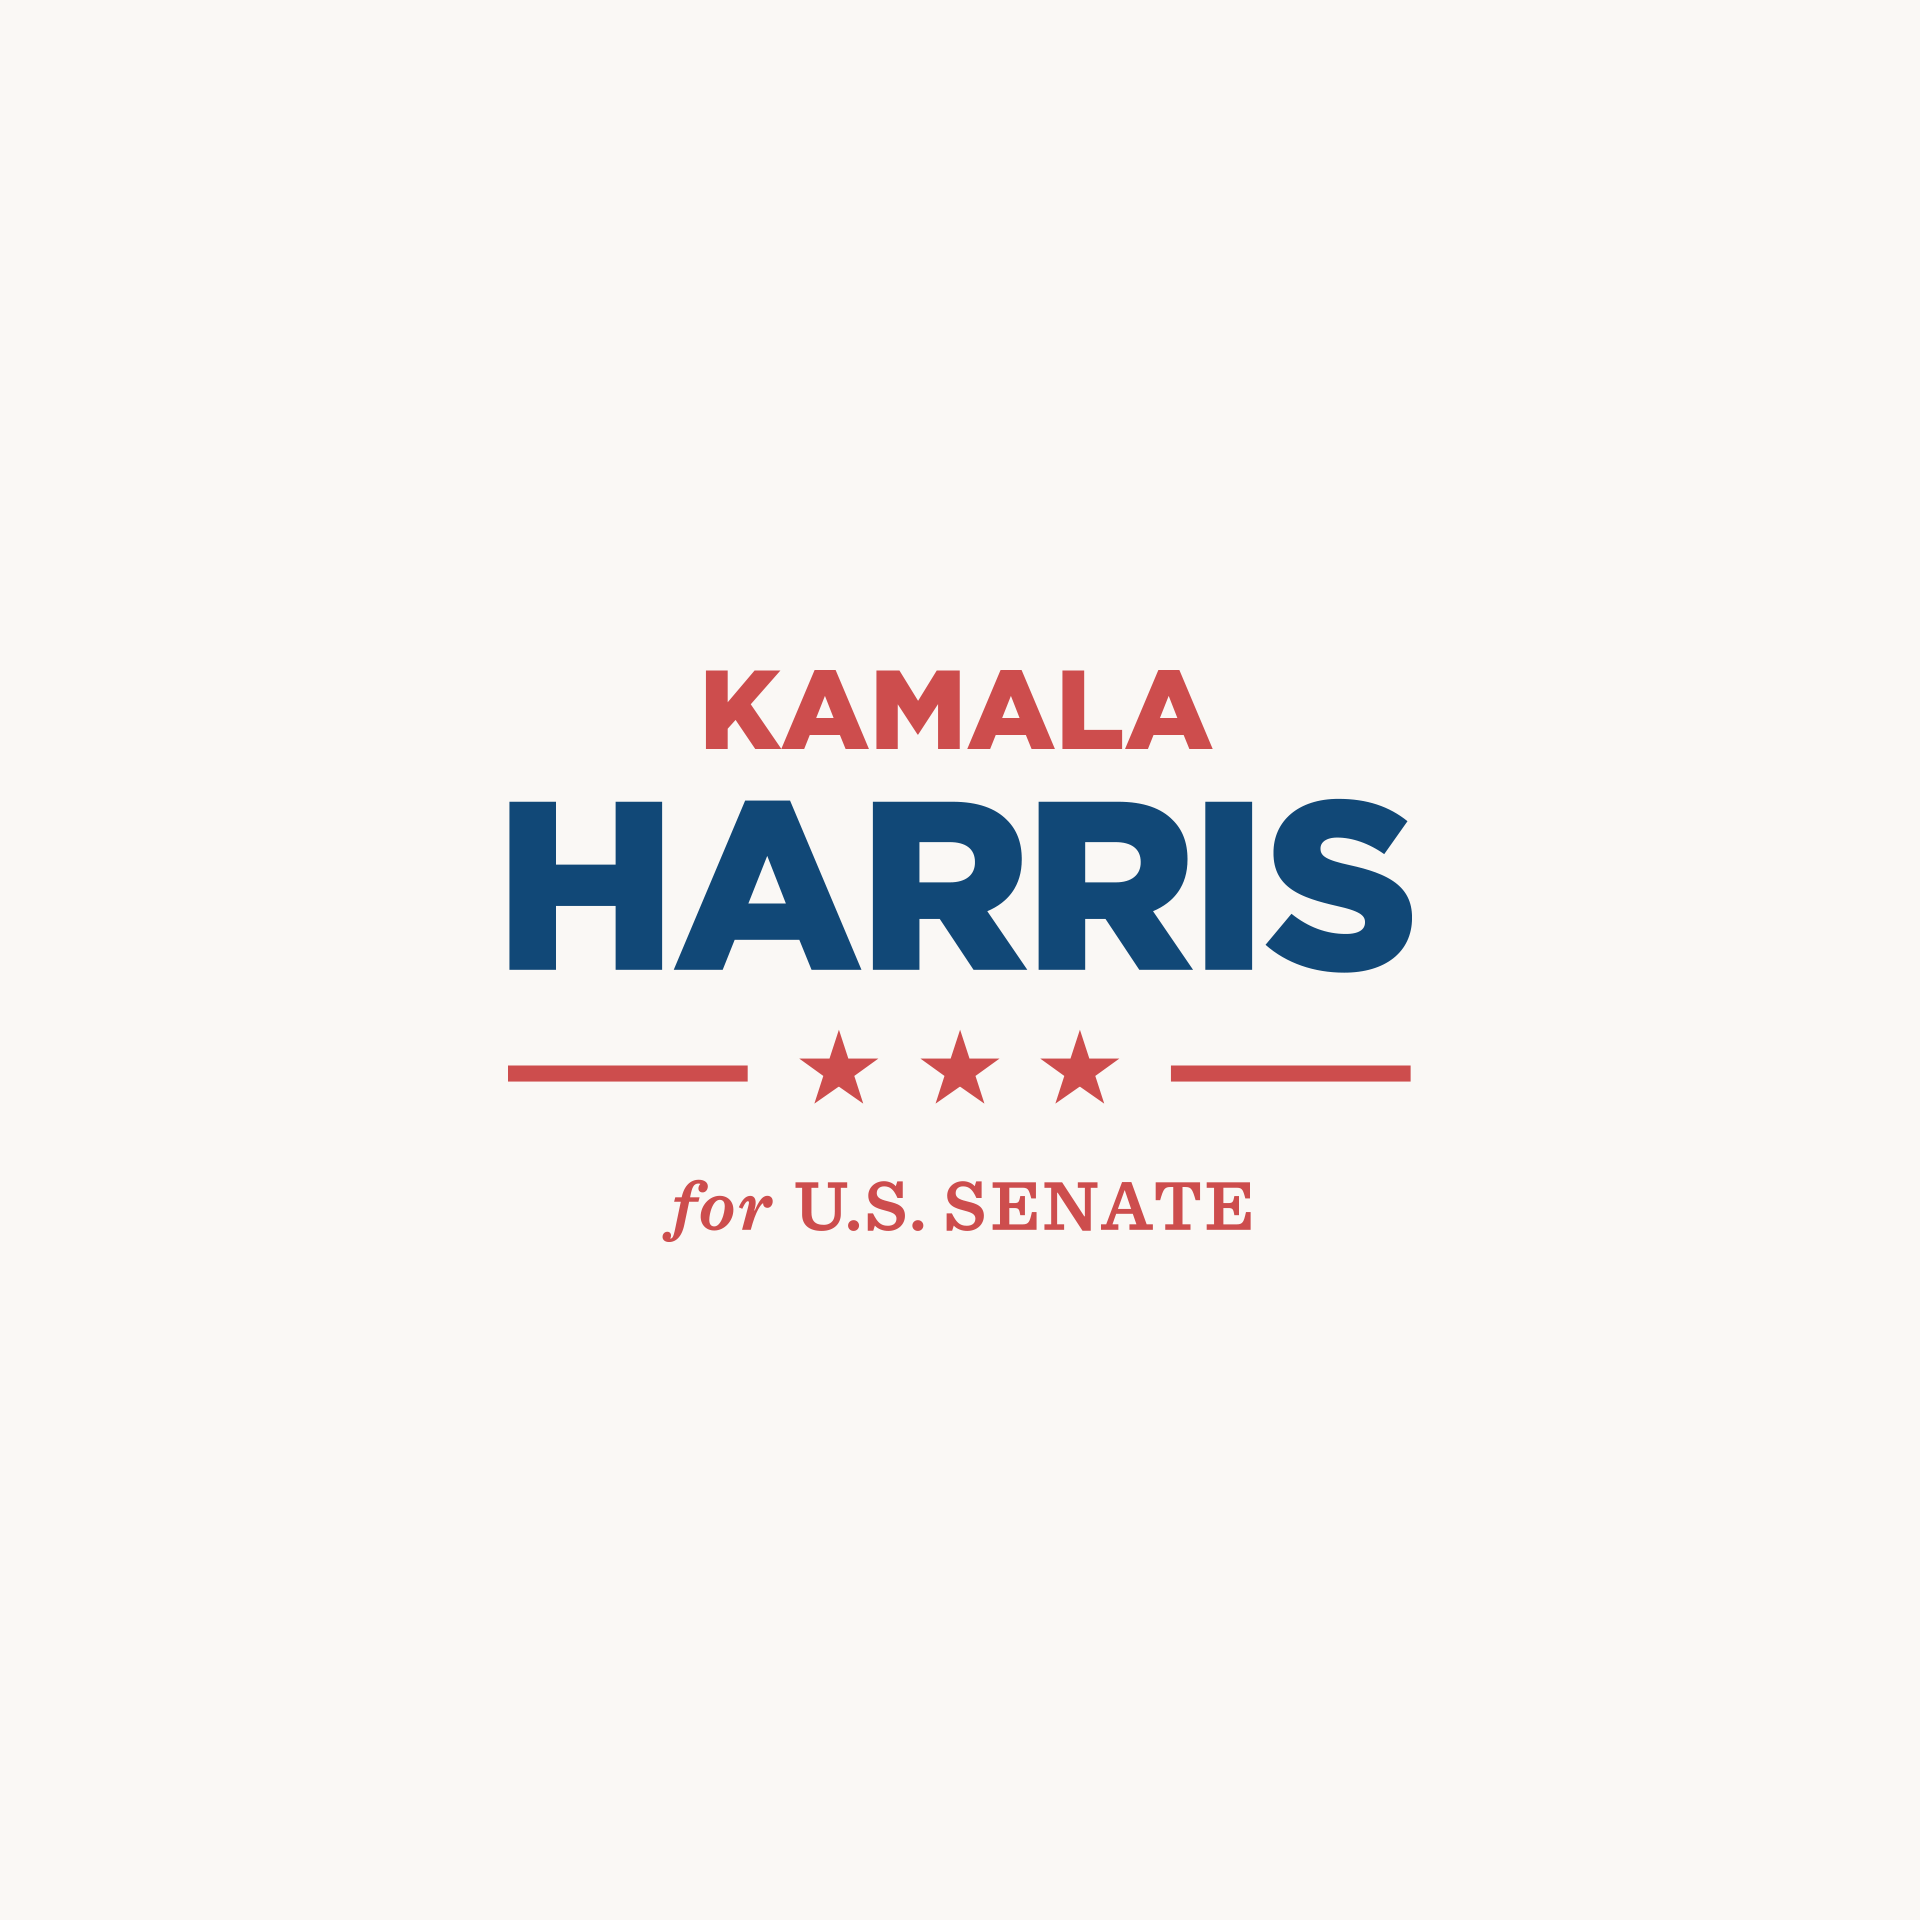 Kamala Harris for U.S. Senate logo